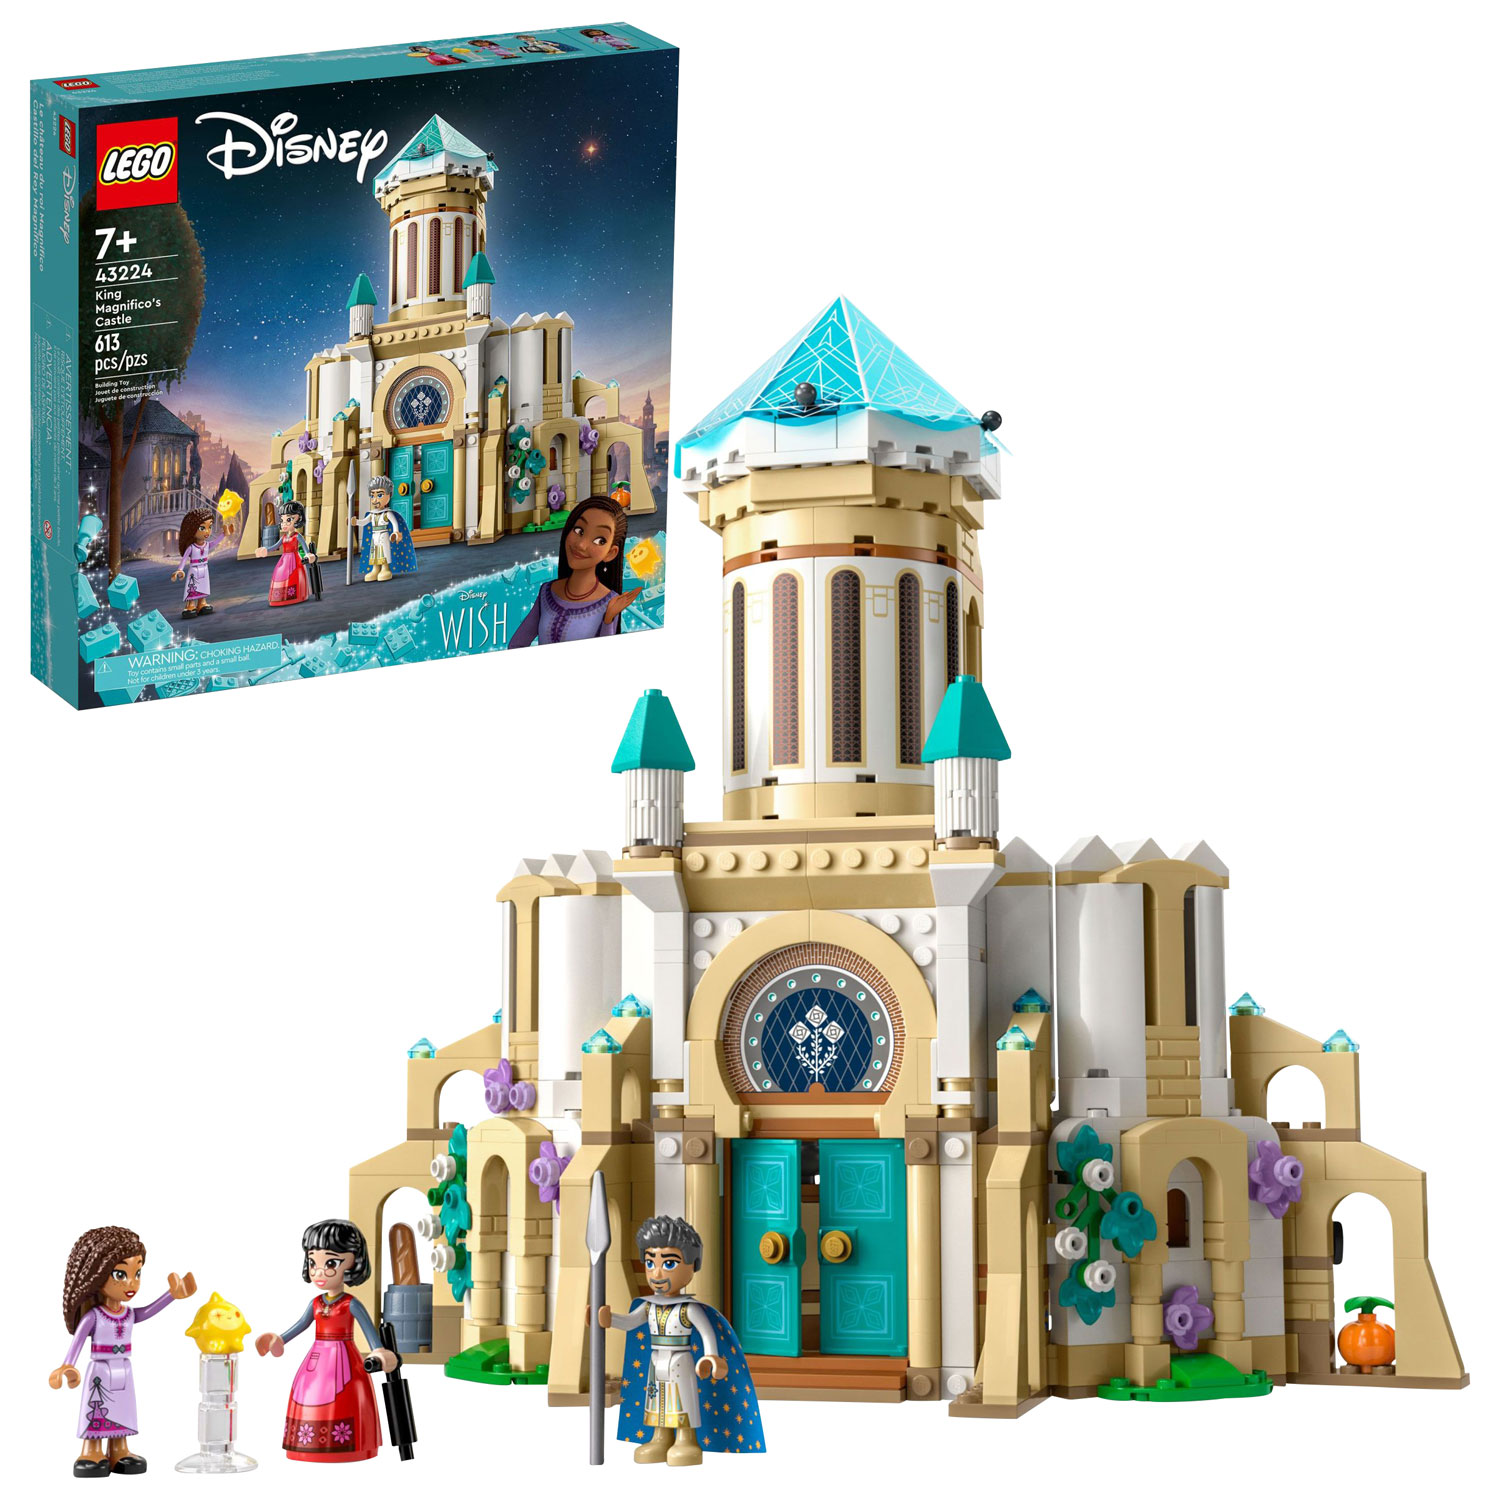 LEGO Disney: King Magnifico's Castle - 613 Pieces (43224)